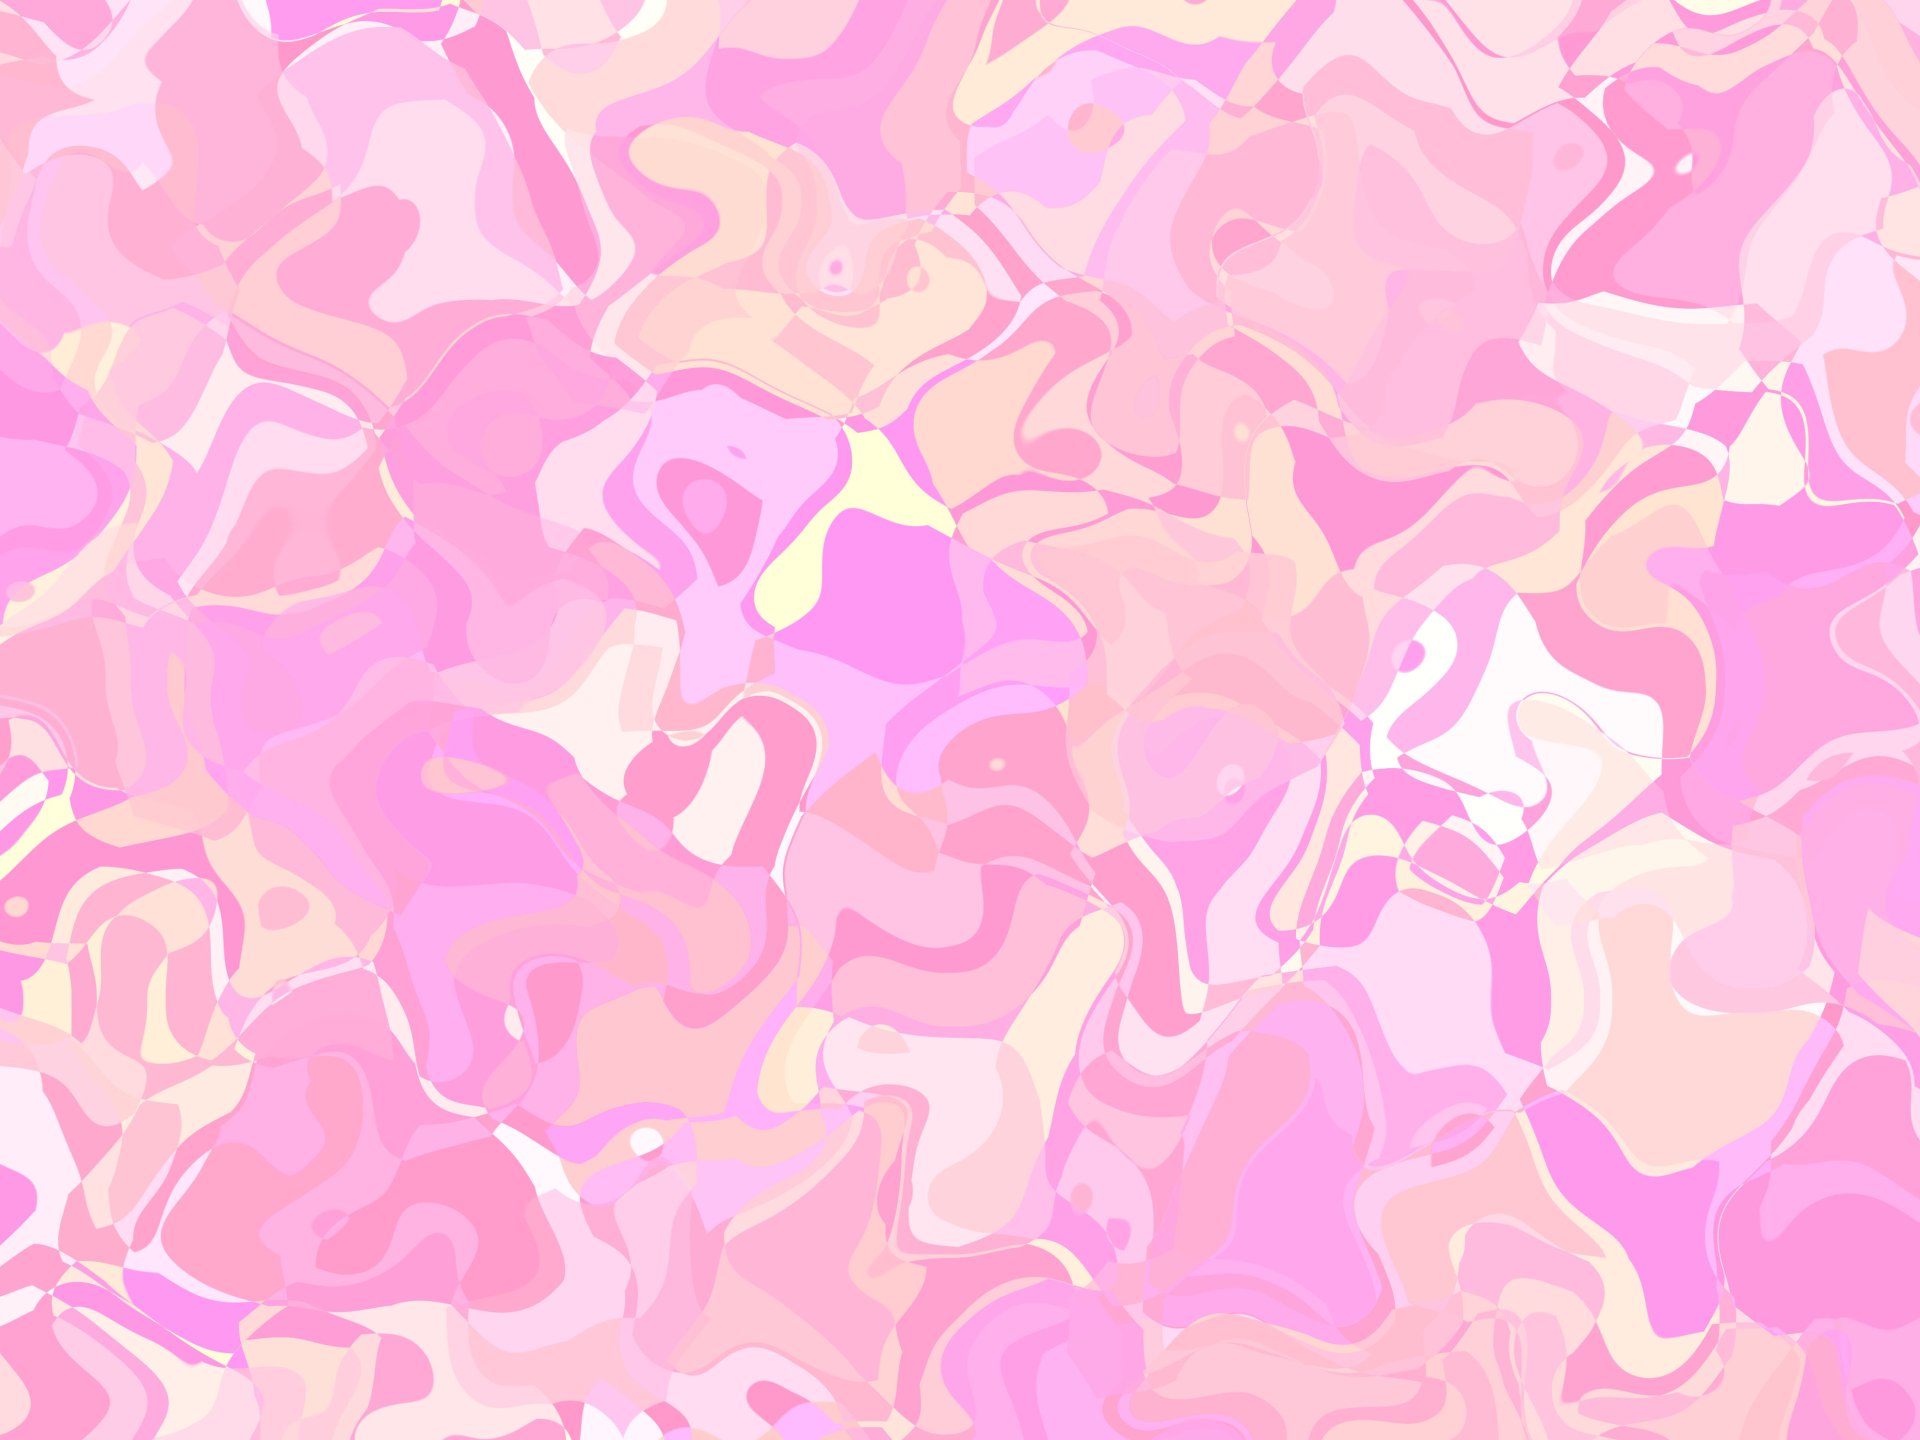 Abstract pink by Susanlu4esm